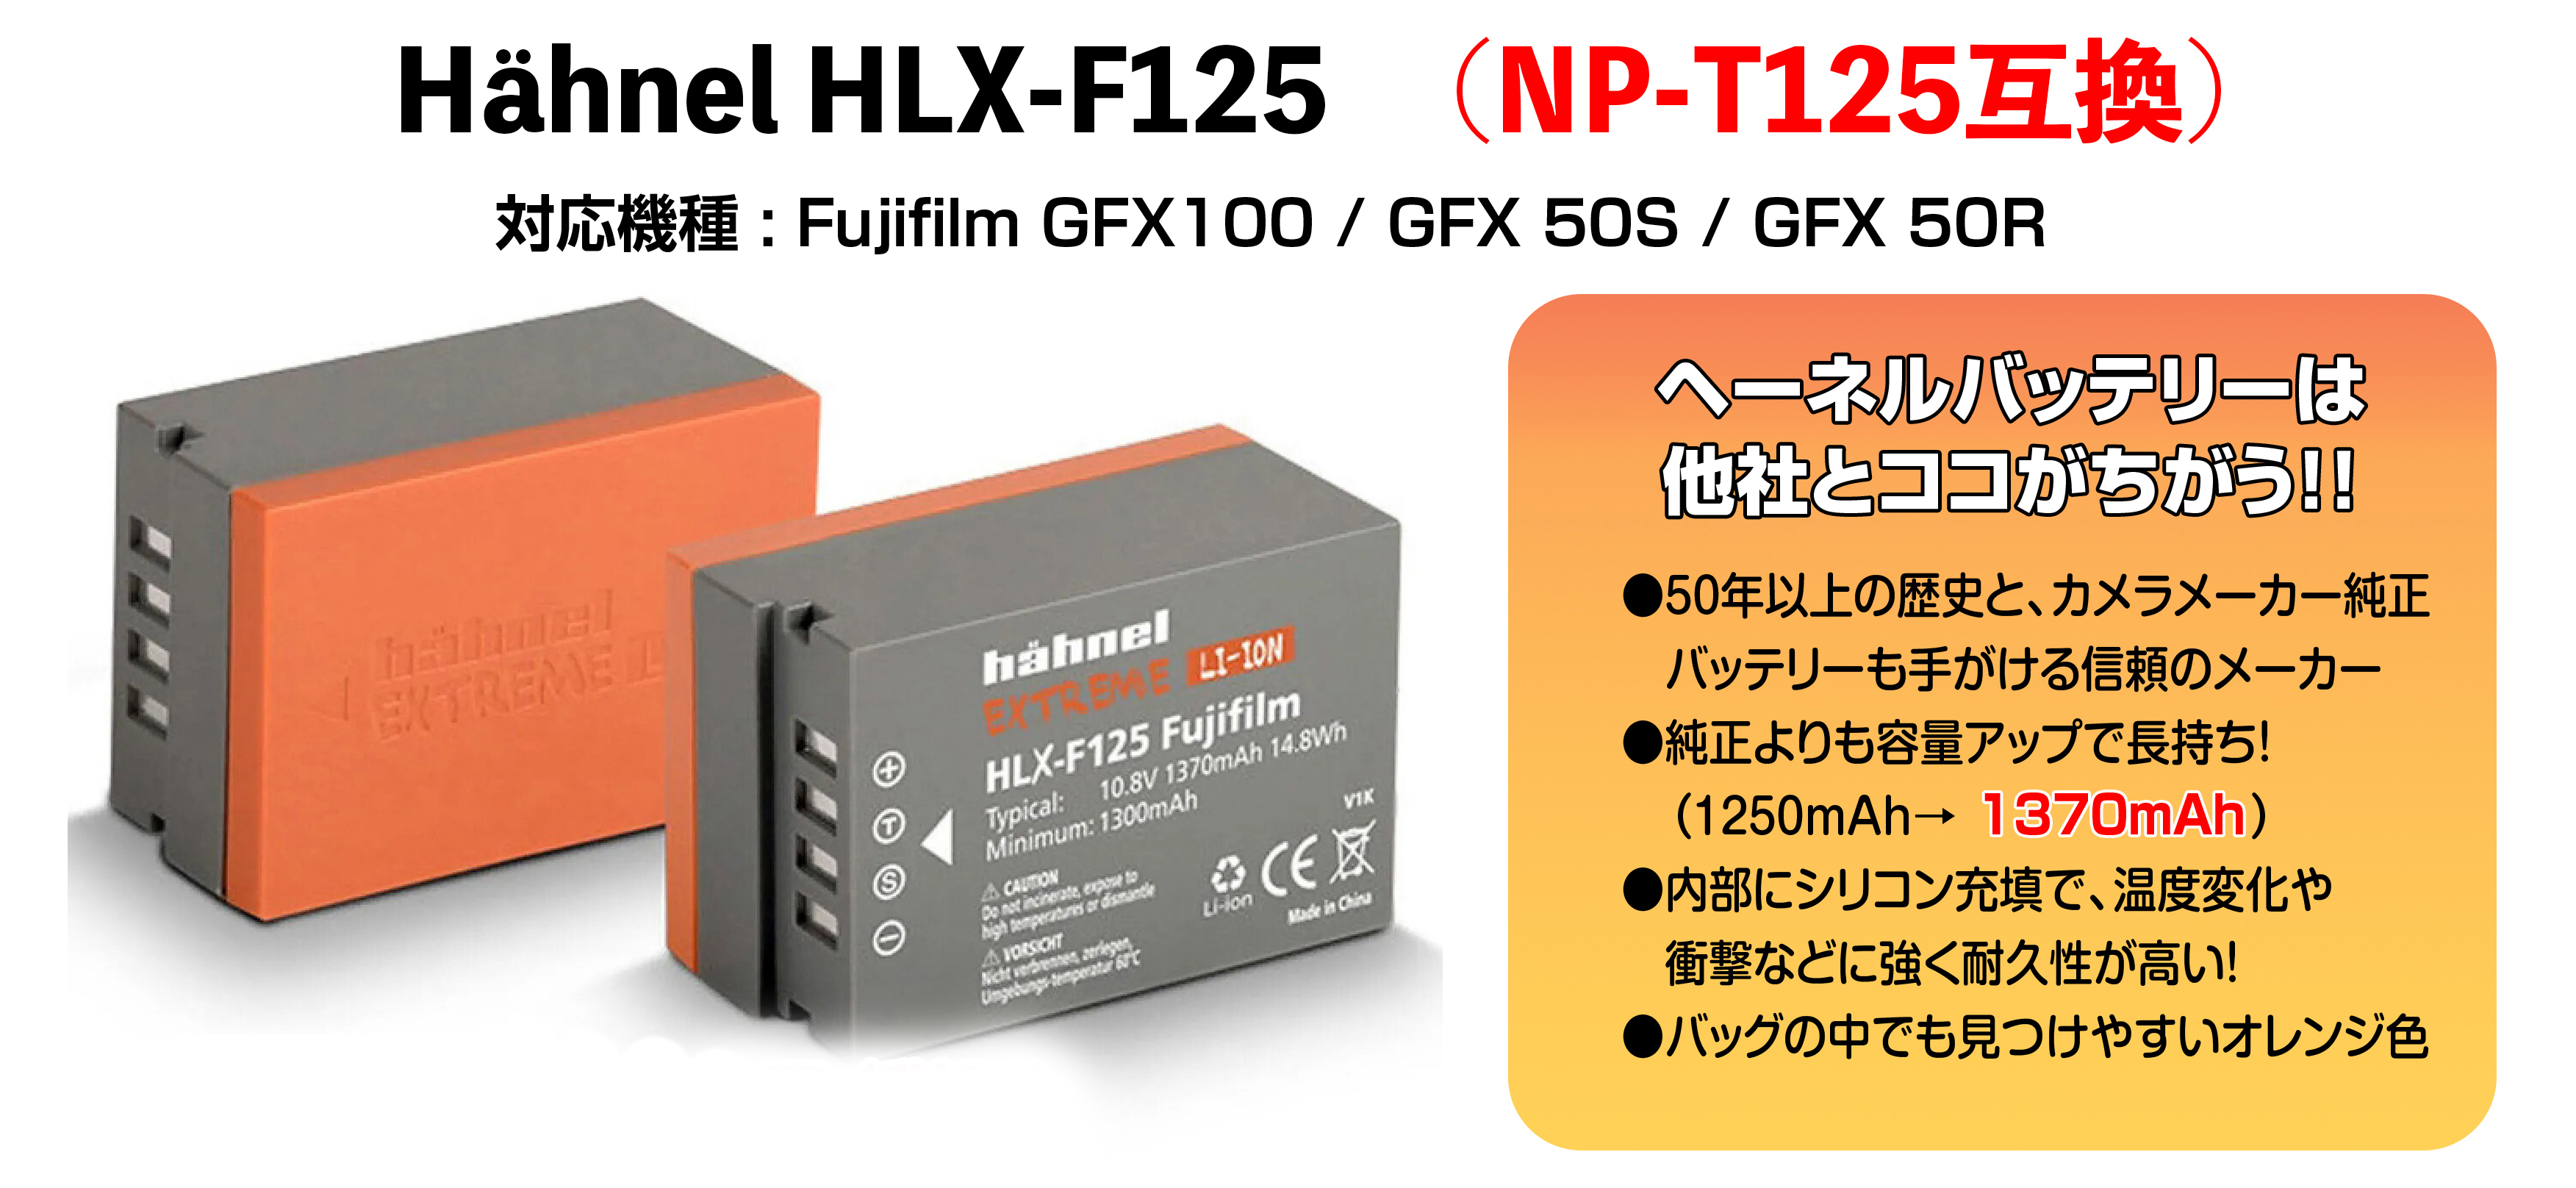 HLX-F125 2